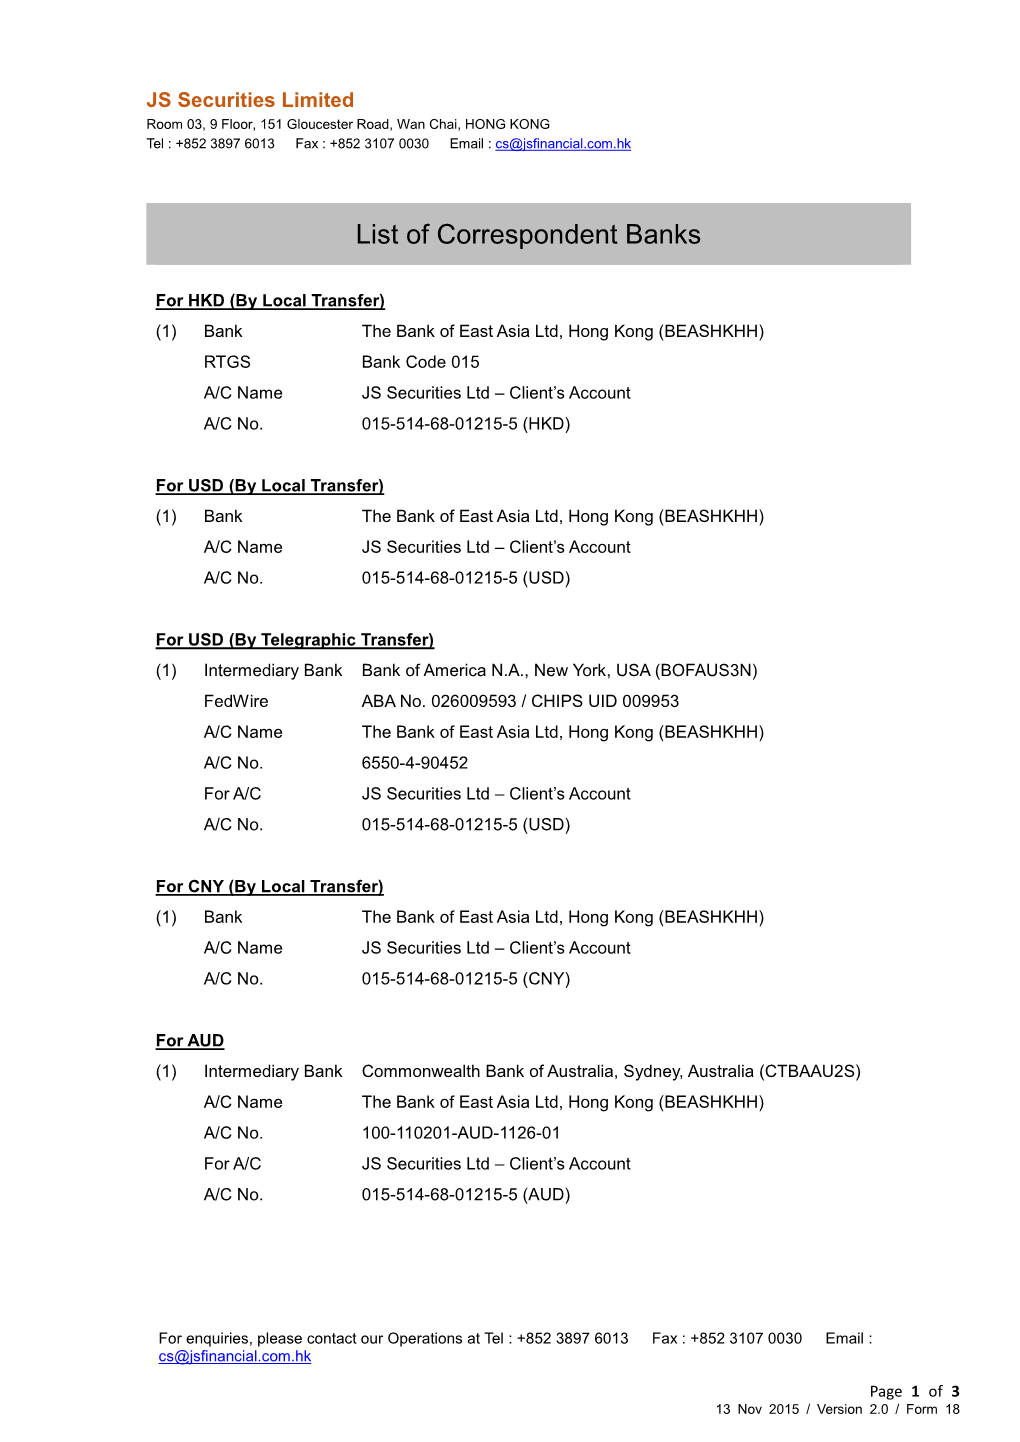 List of Correspondent Banks